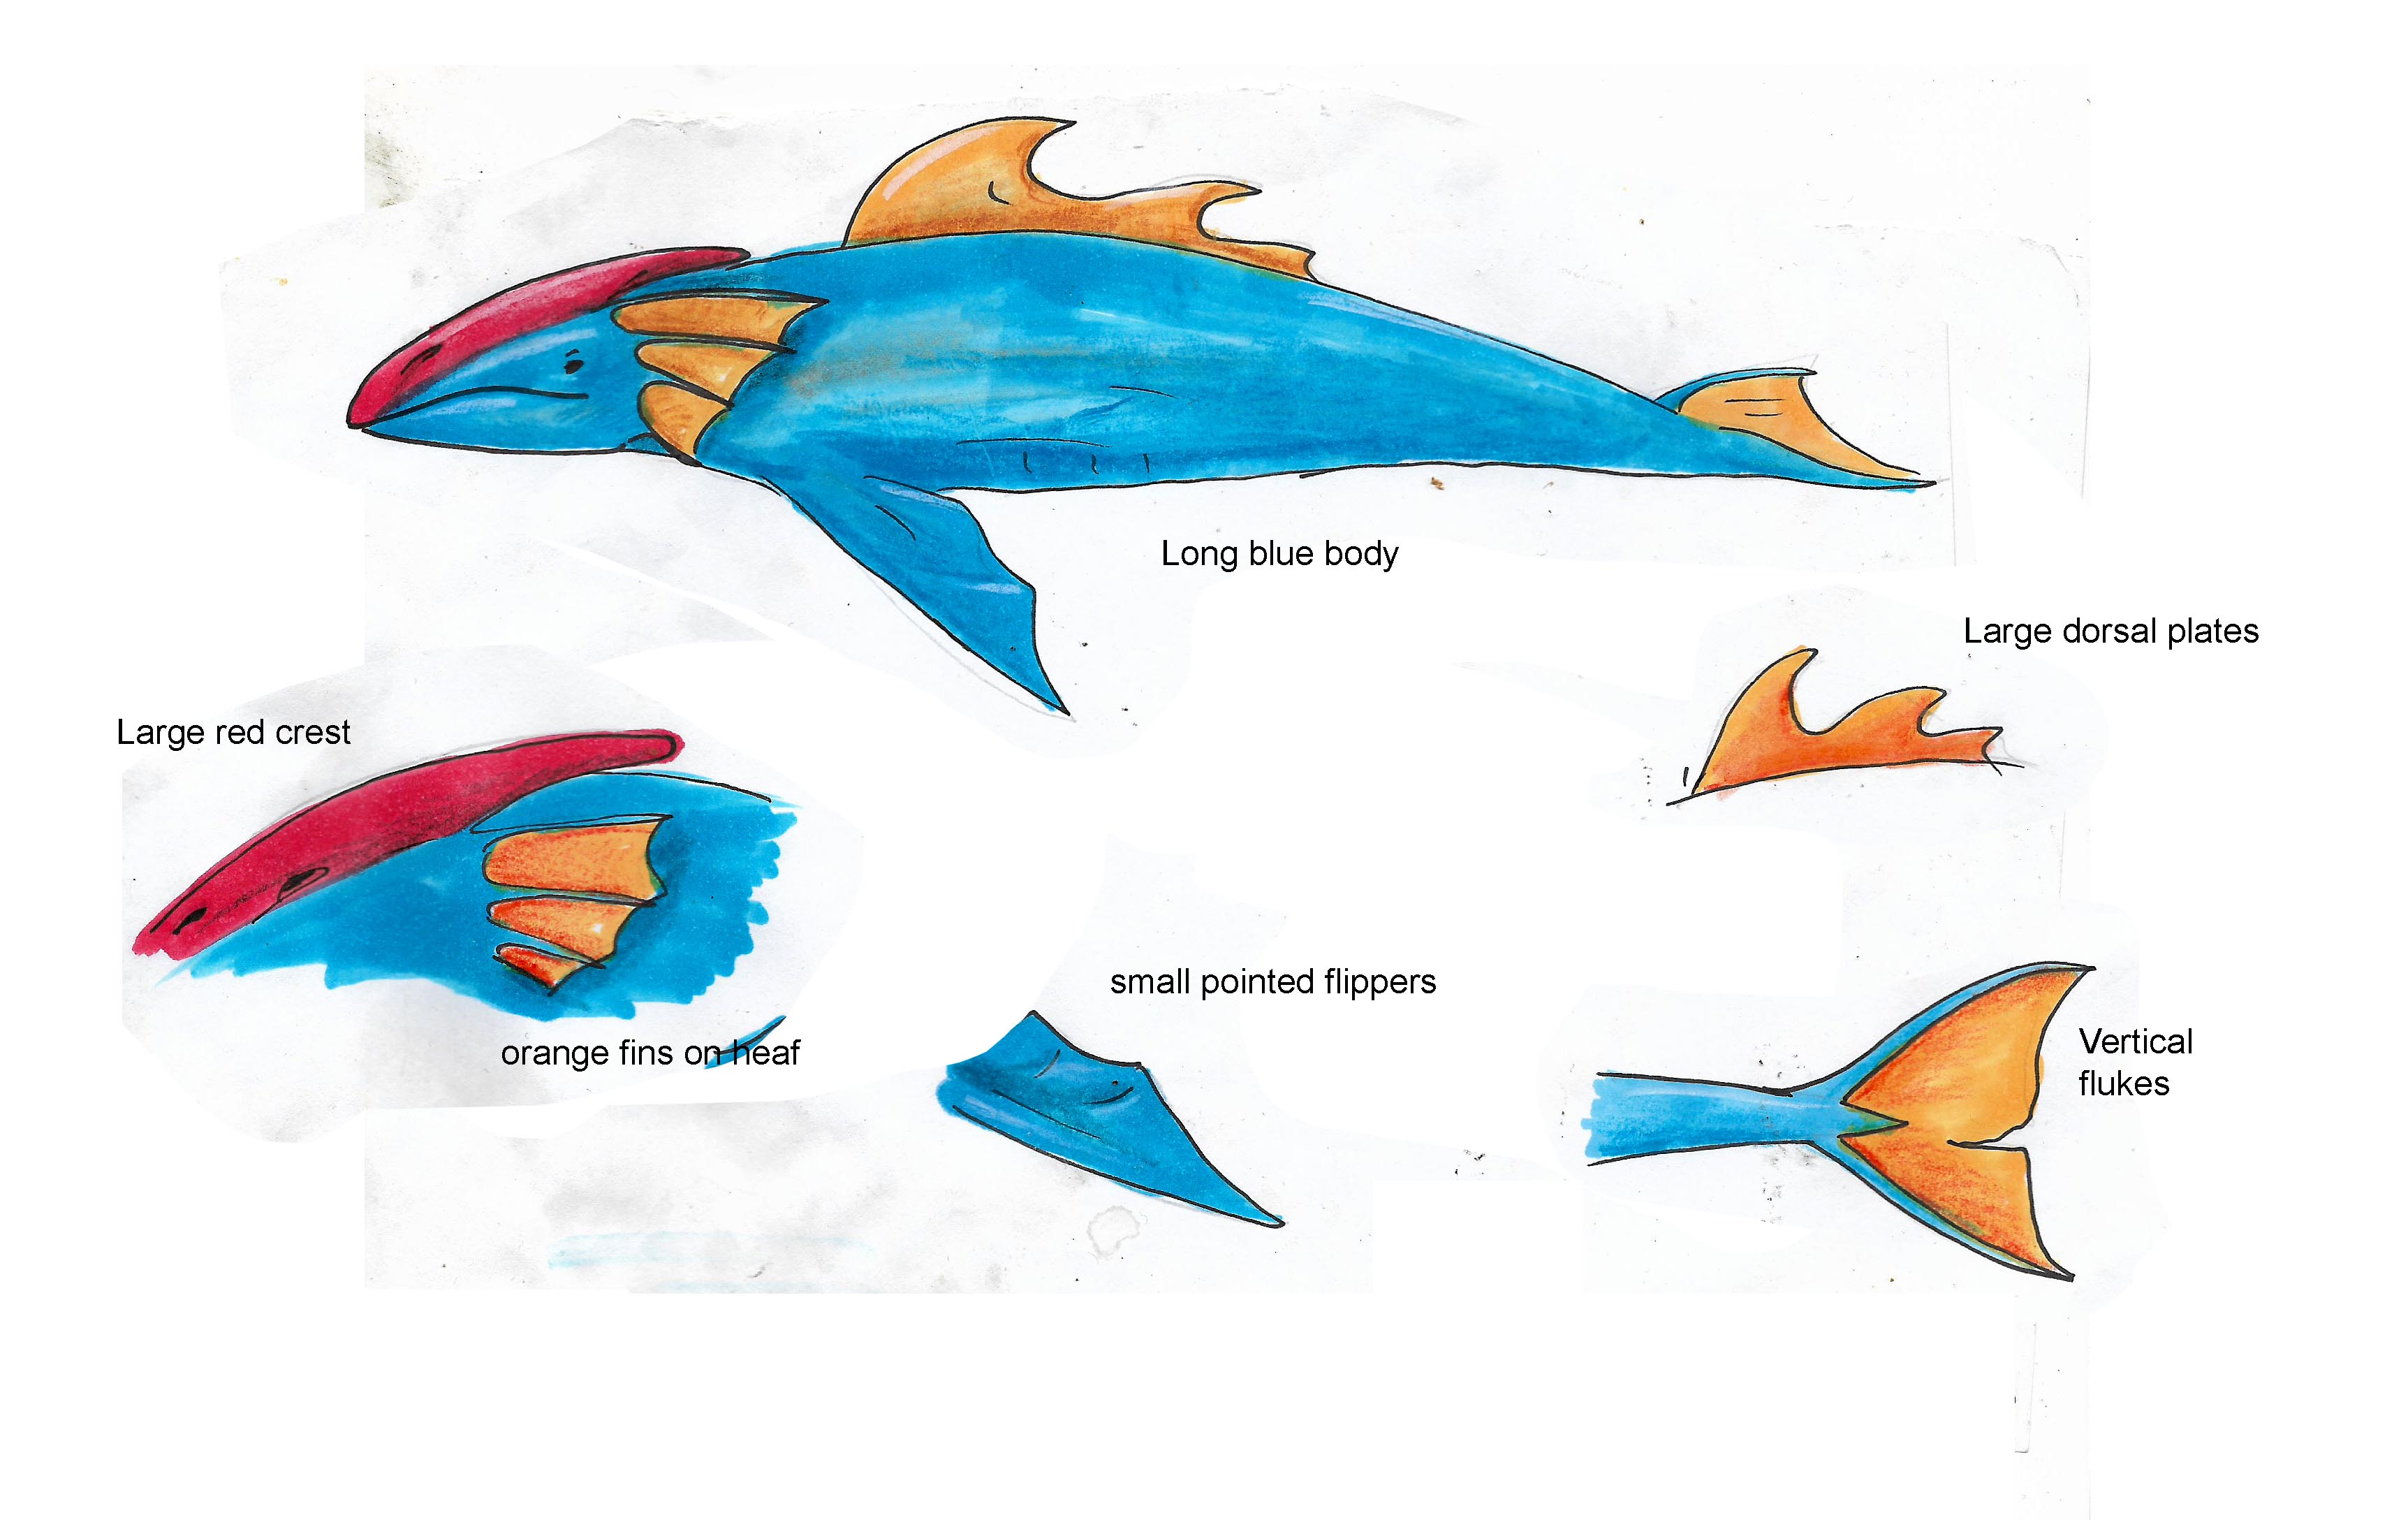 Great sea monster anatomy